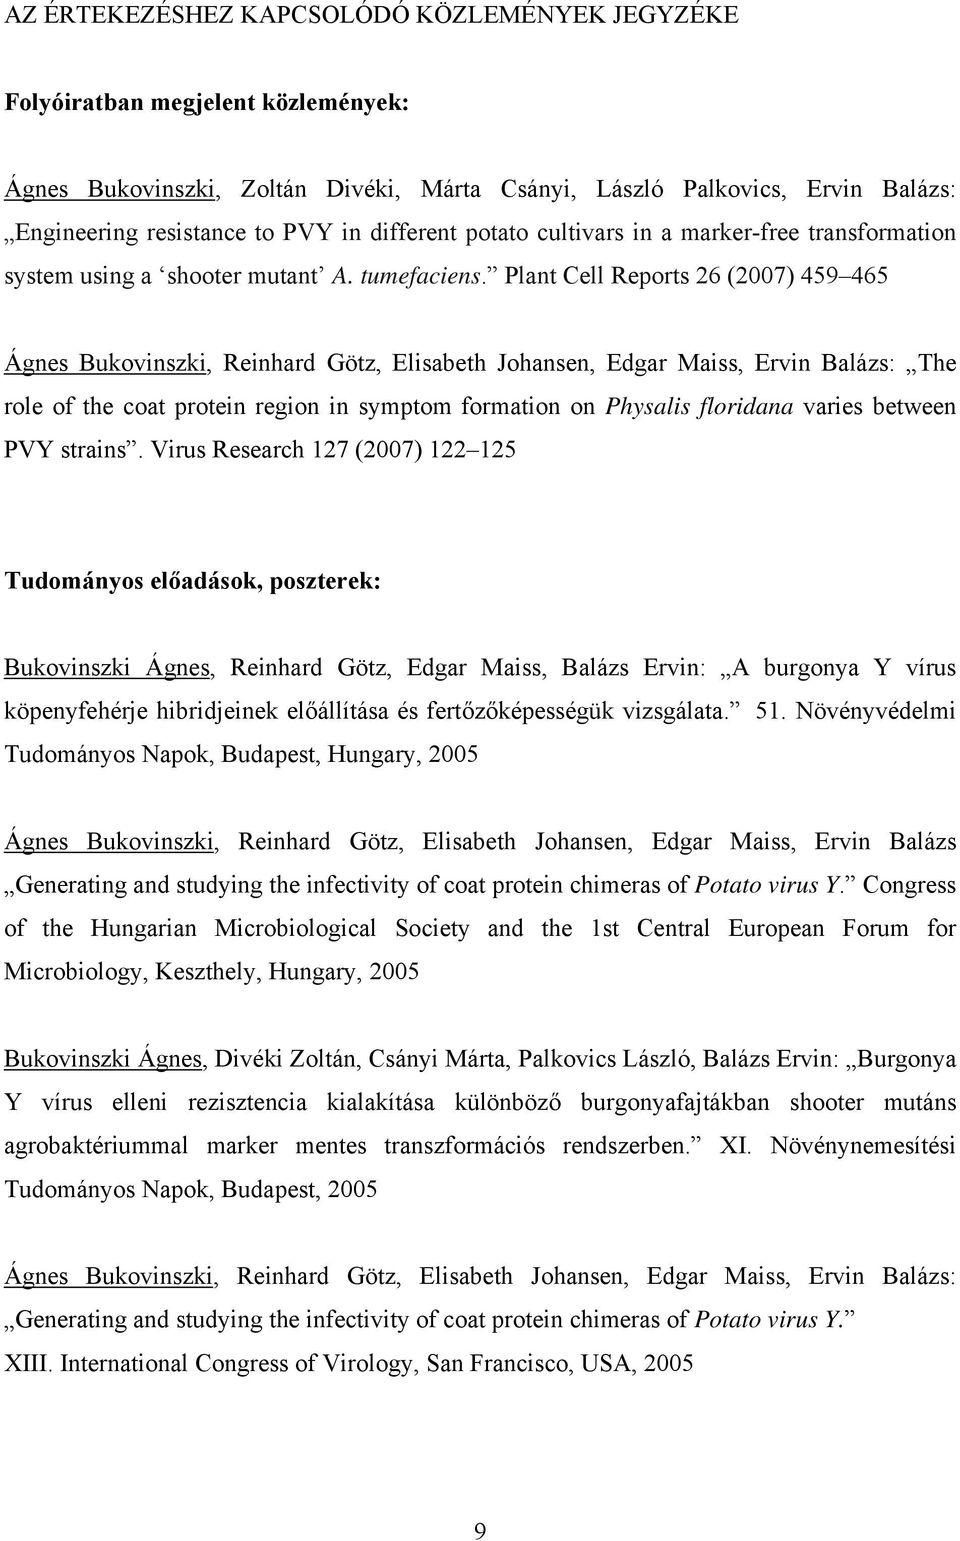 Plant Cell Reports 26 (2007) 459 465 Ágnes Bukovinszki, Reinhard Götz, Elisabeth Johansen, Edgar Maiss, Ervin Balázs: The role of the coat protein region in symptom formation on Physalis floridana